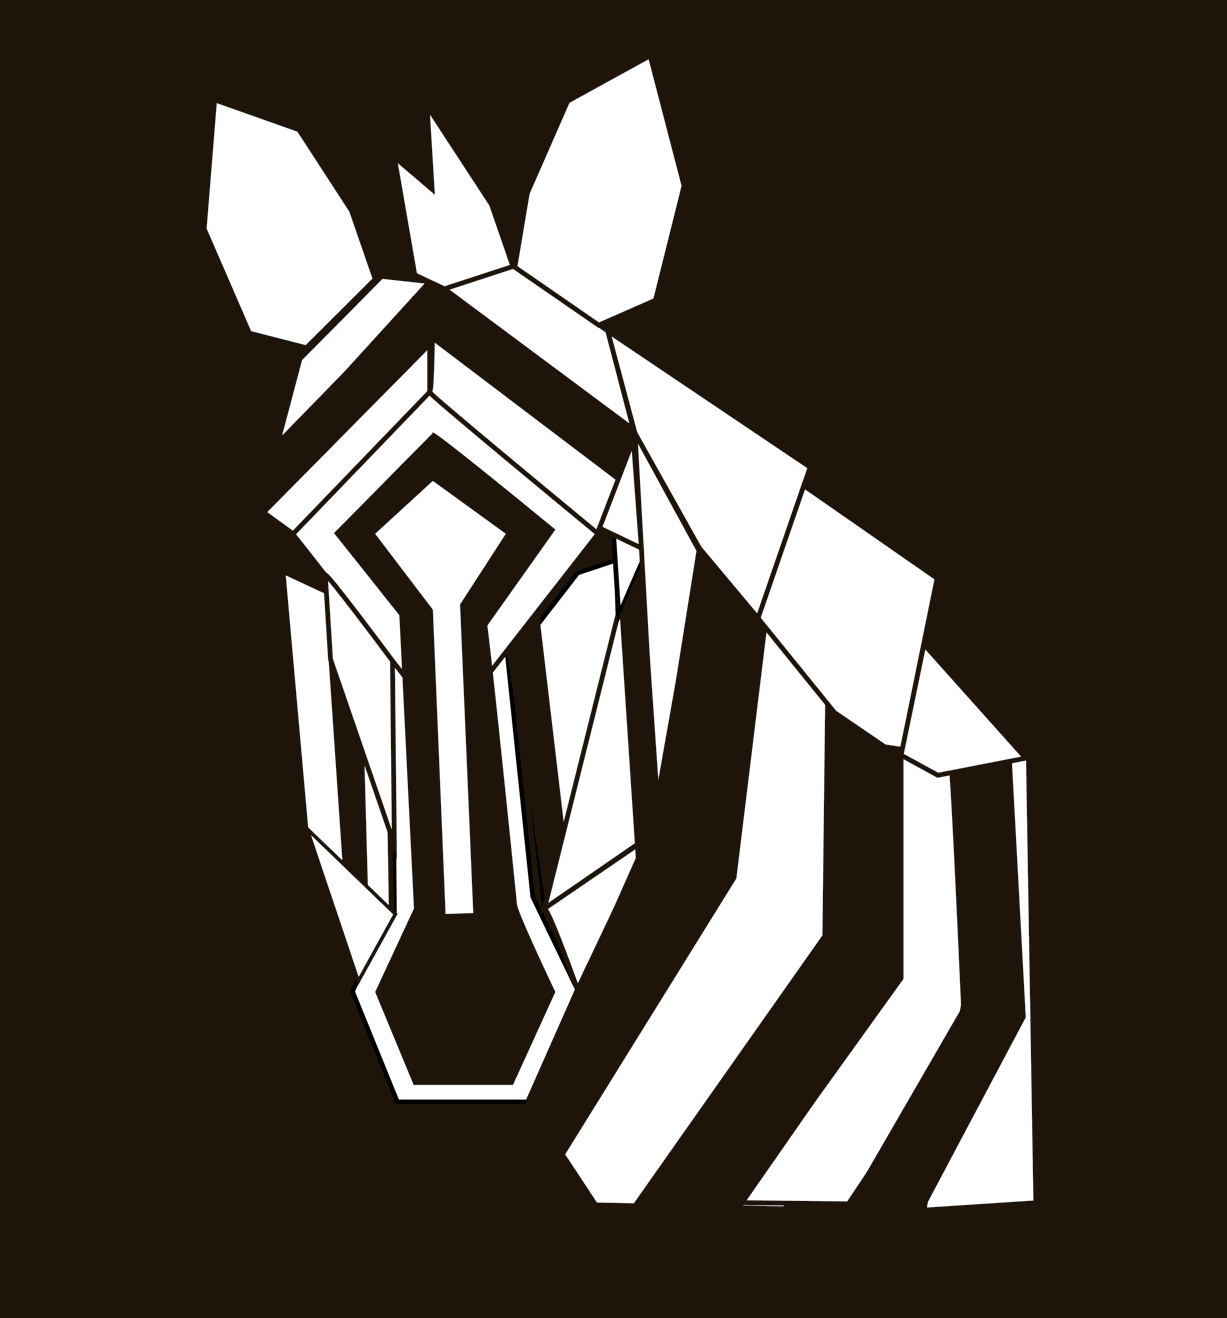 Zebra staking logo